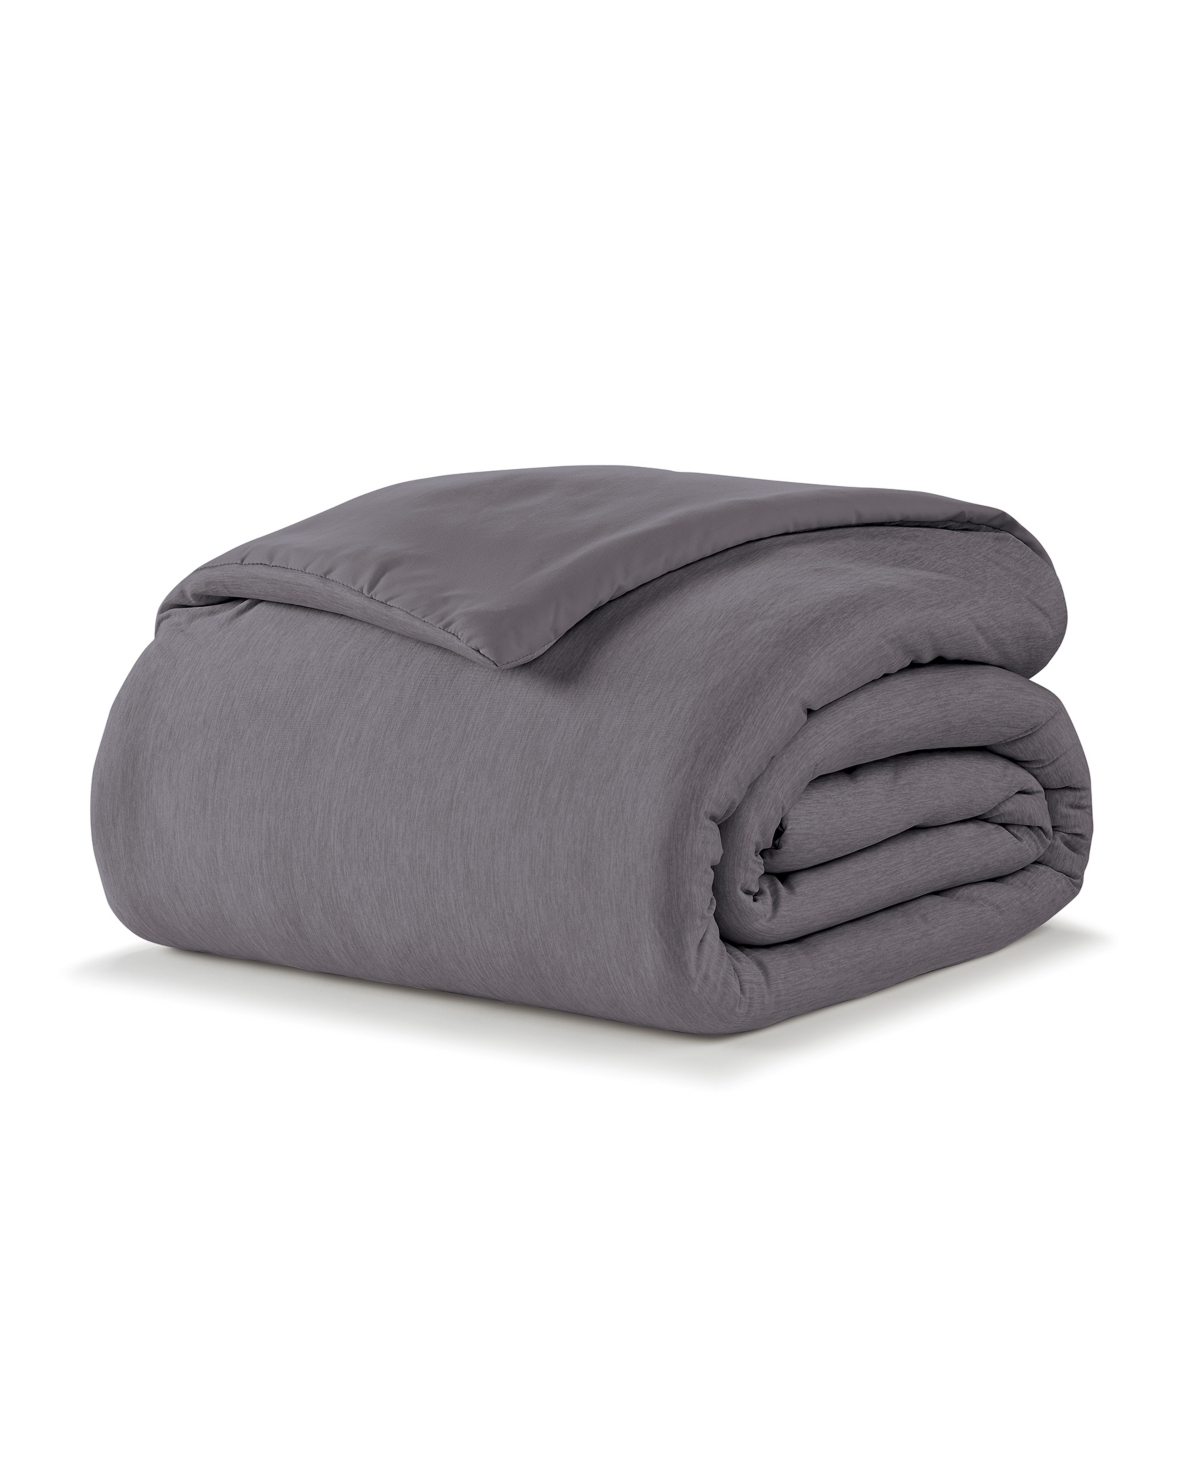 Ella Jayne Cooling Jersey Down-alternative Comforter, Full/queen In Charcoal